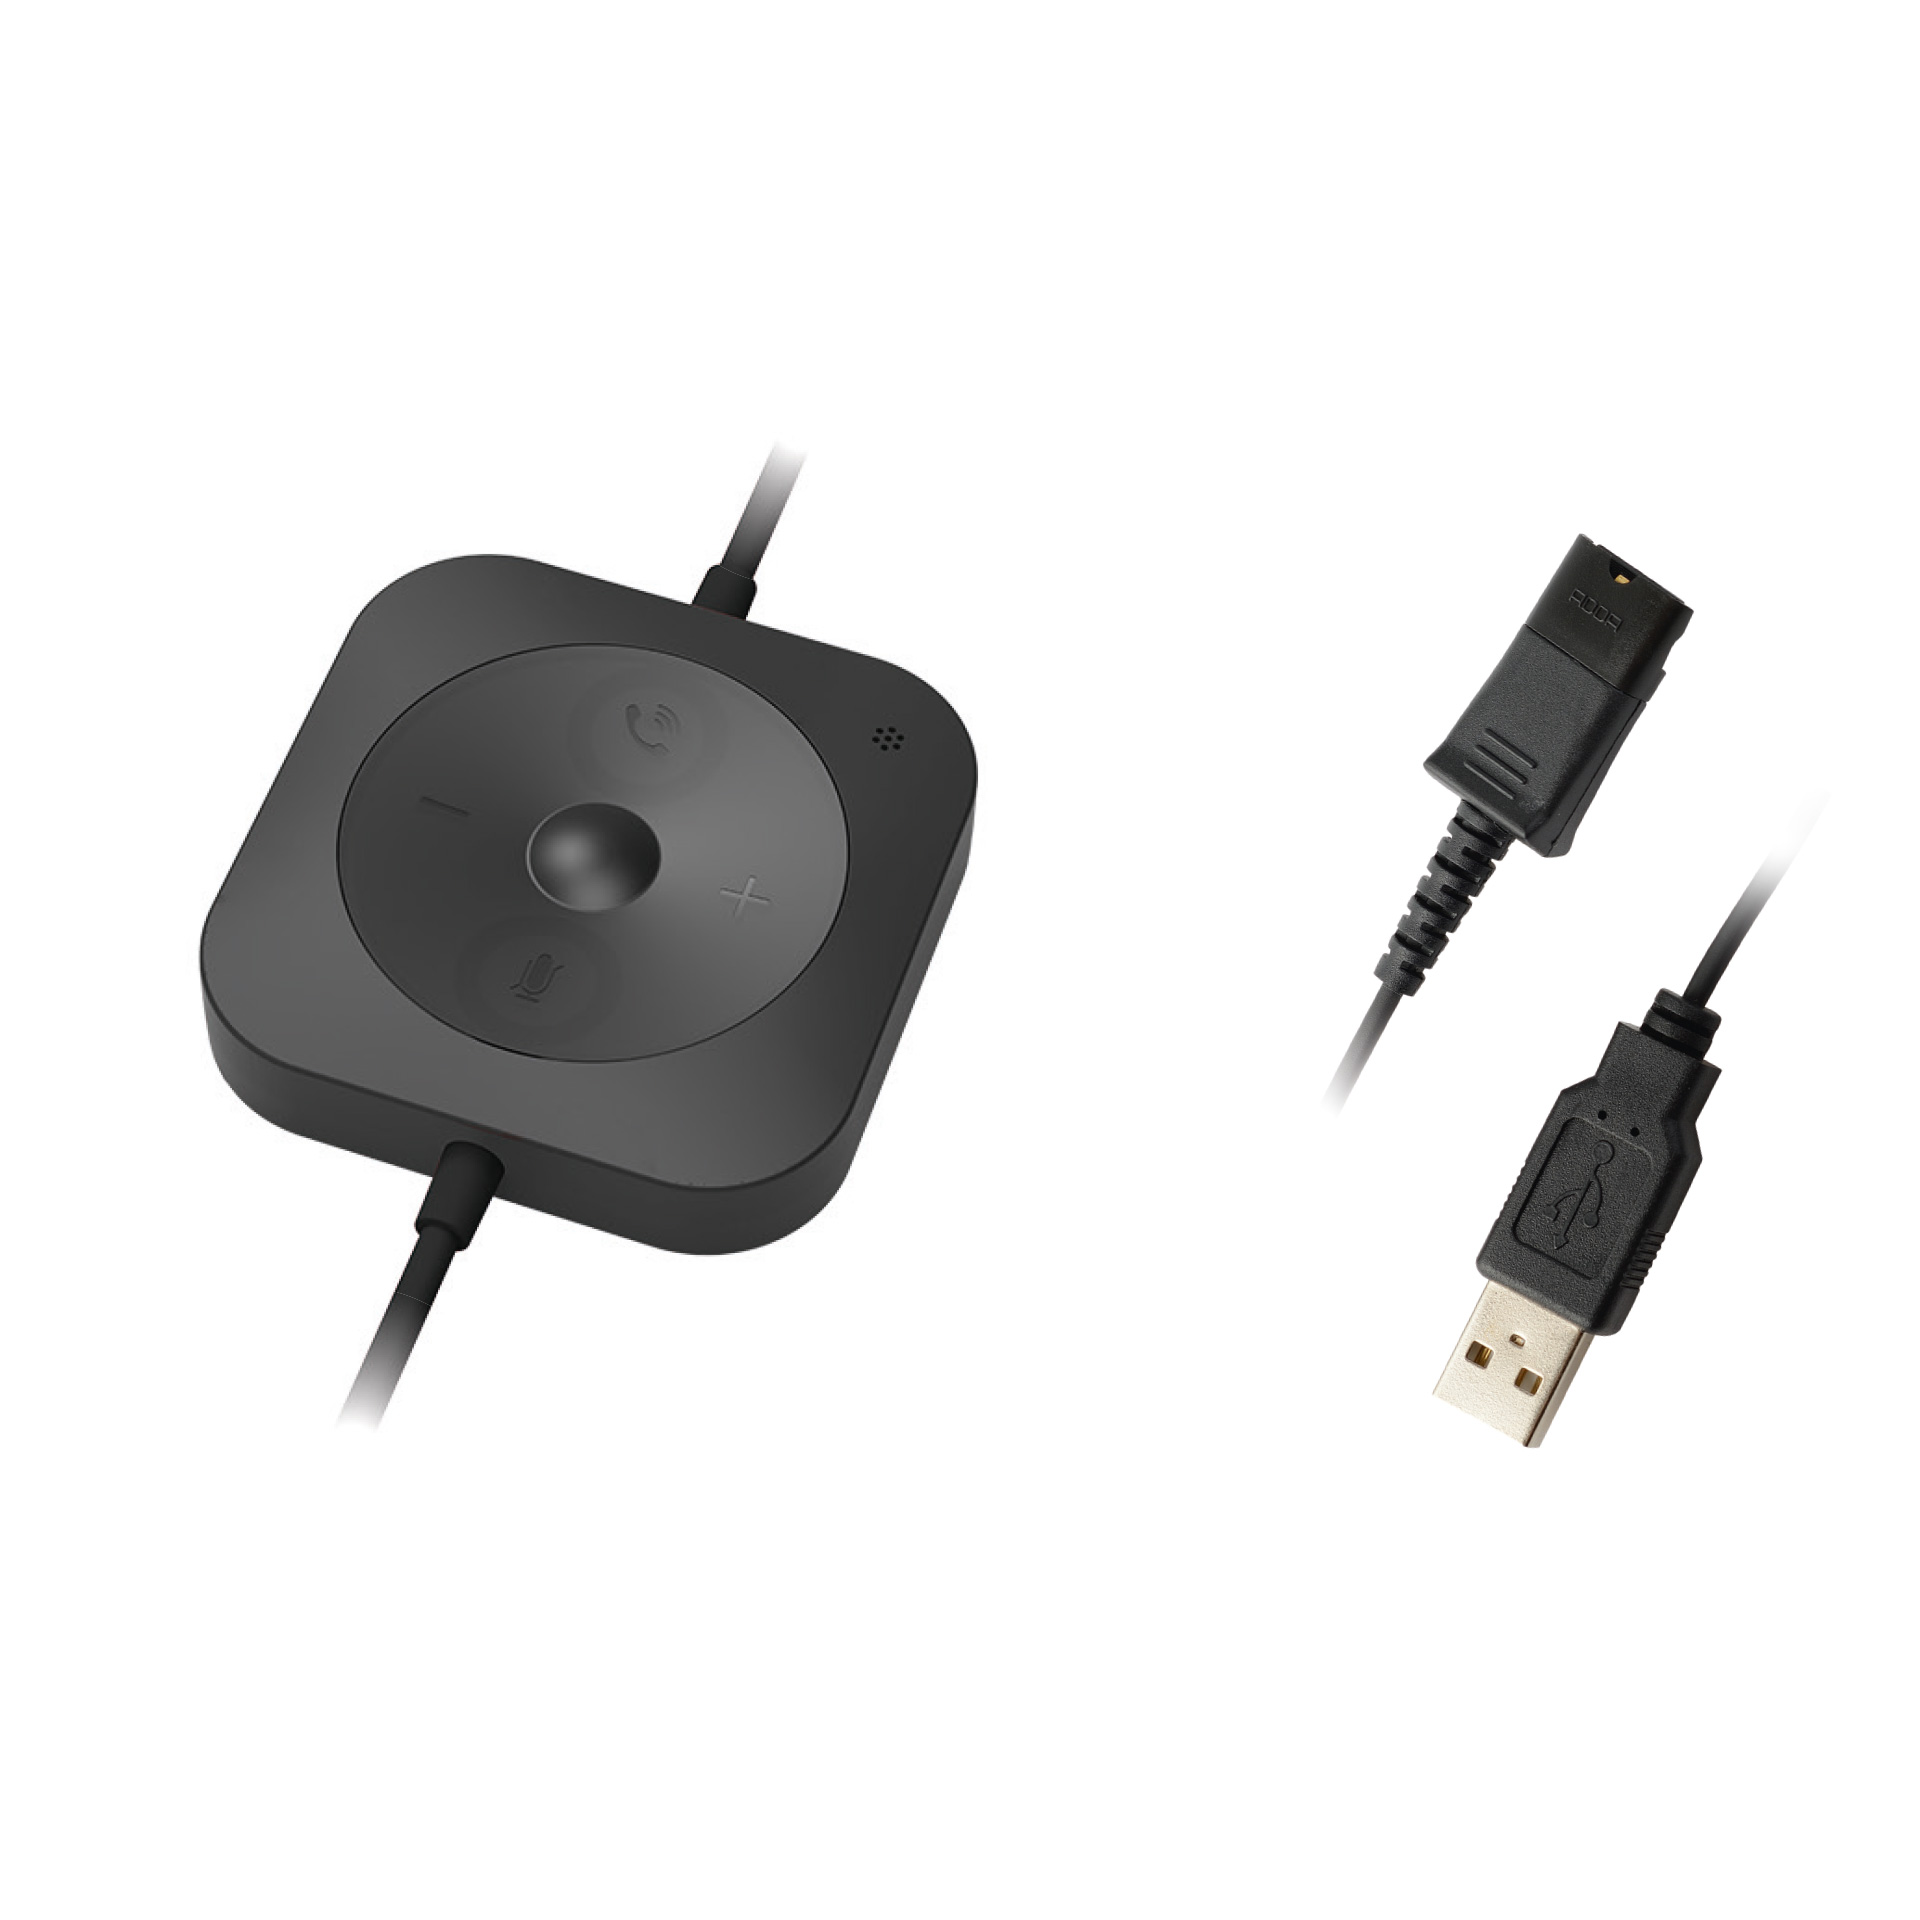 Addasound DN4020 USB-A auf QD-Anschlusskabel mit Call-Control, aktiver Geräuschunterdrückung und Rufannahme